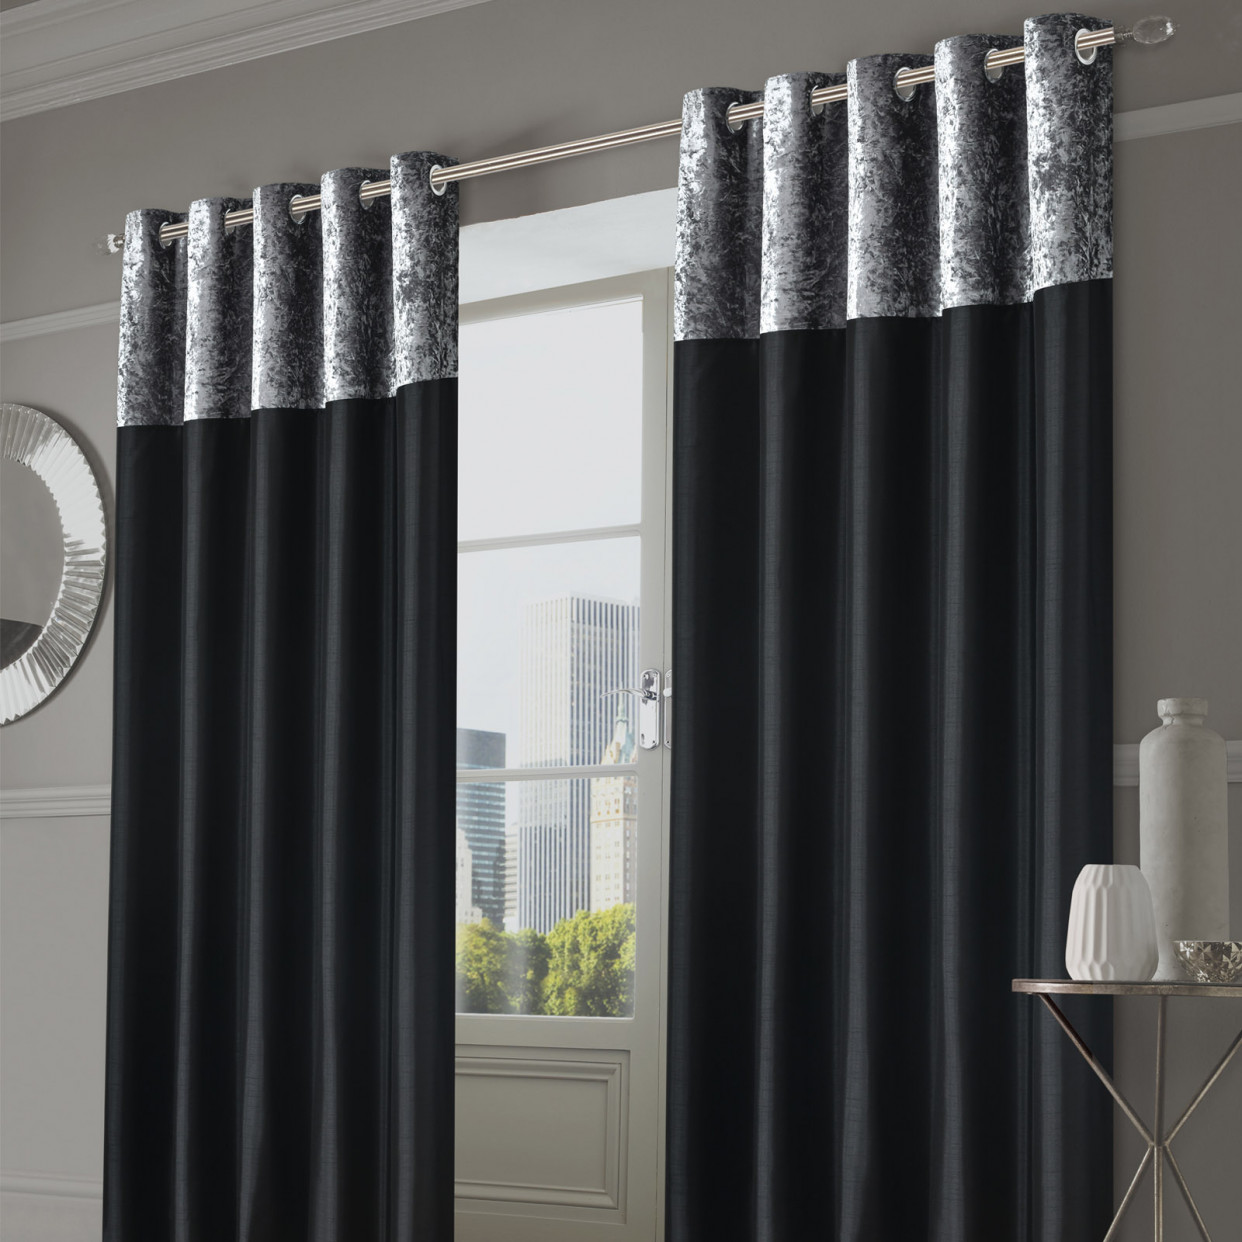 Sienna Home Manhattan Crushed Velvet Band Eyelet Curtains - Black, 46" x 54">